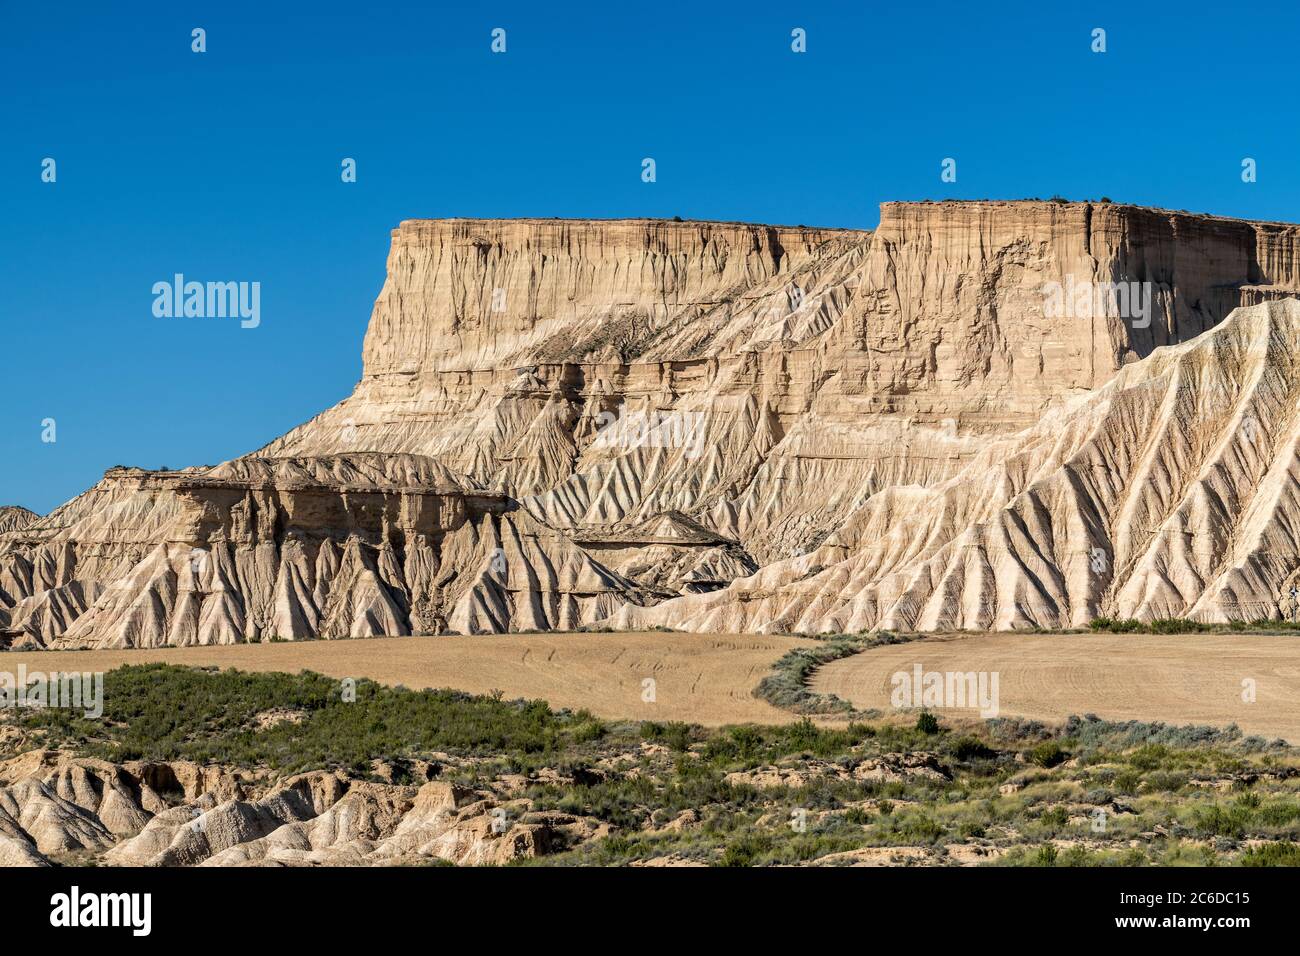 Desert landscape, Bardenas Reales badlands, Navarre, Spain Stock Photo